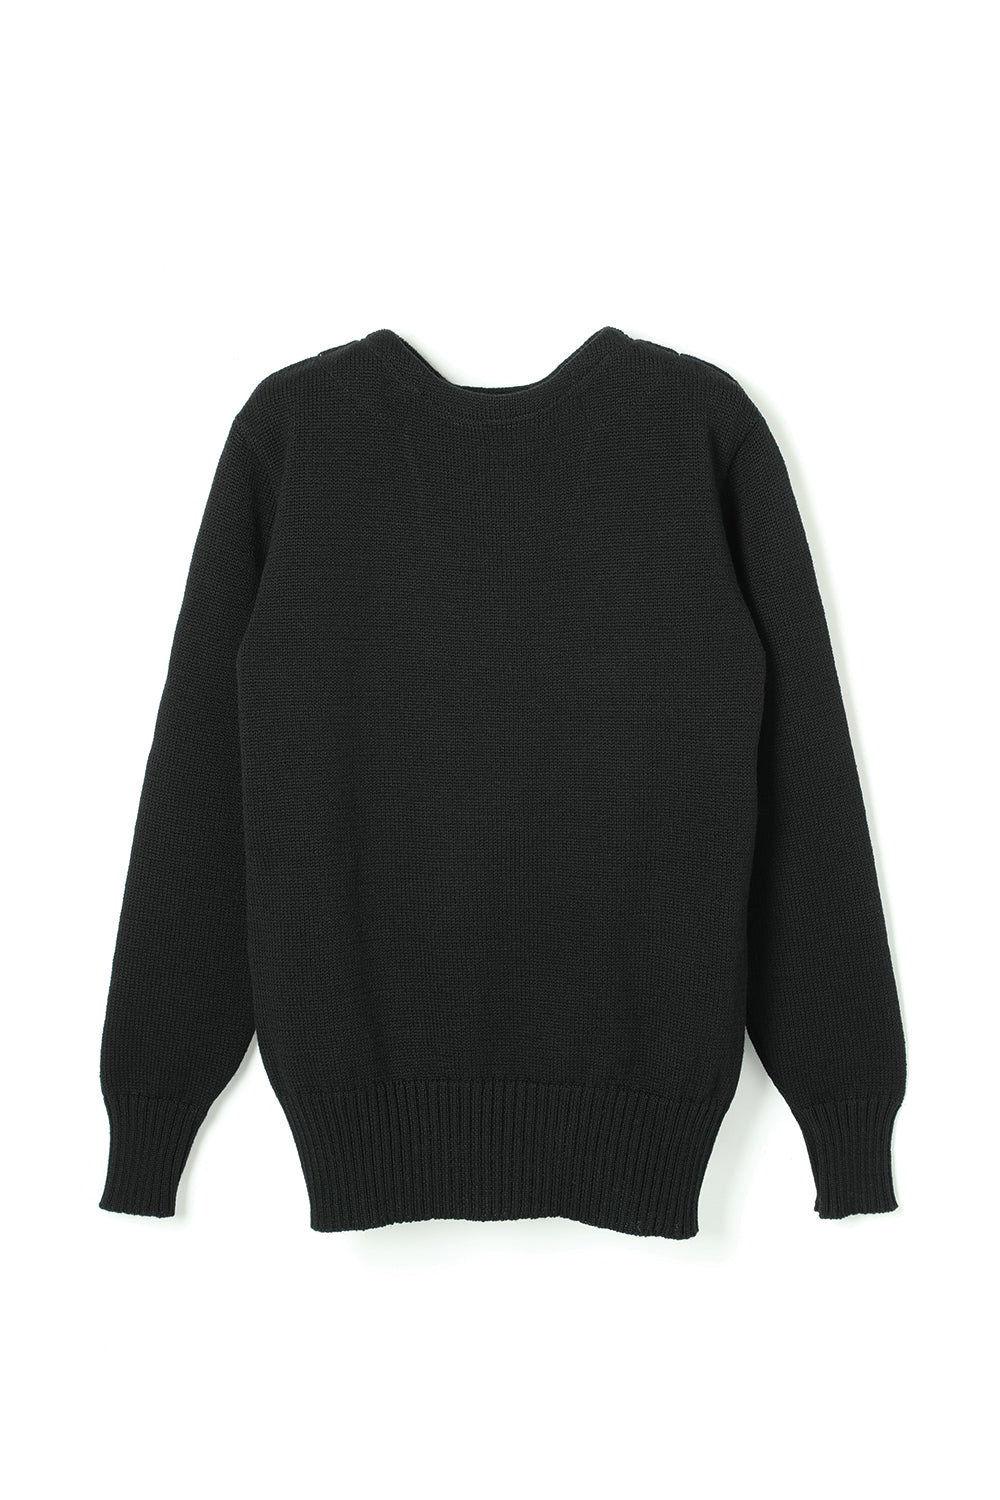 Lot.725 Boat Neck Sweater -Black-